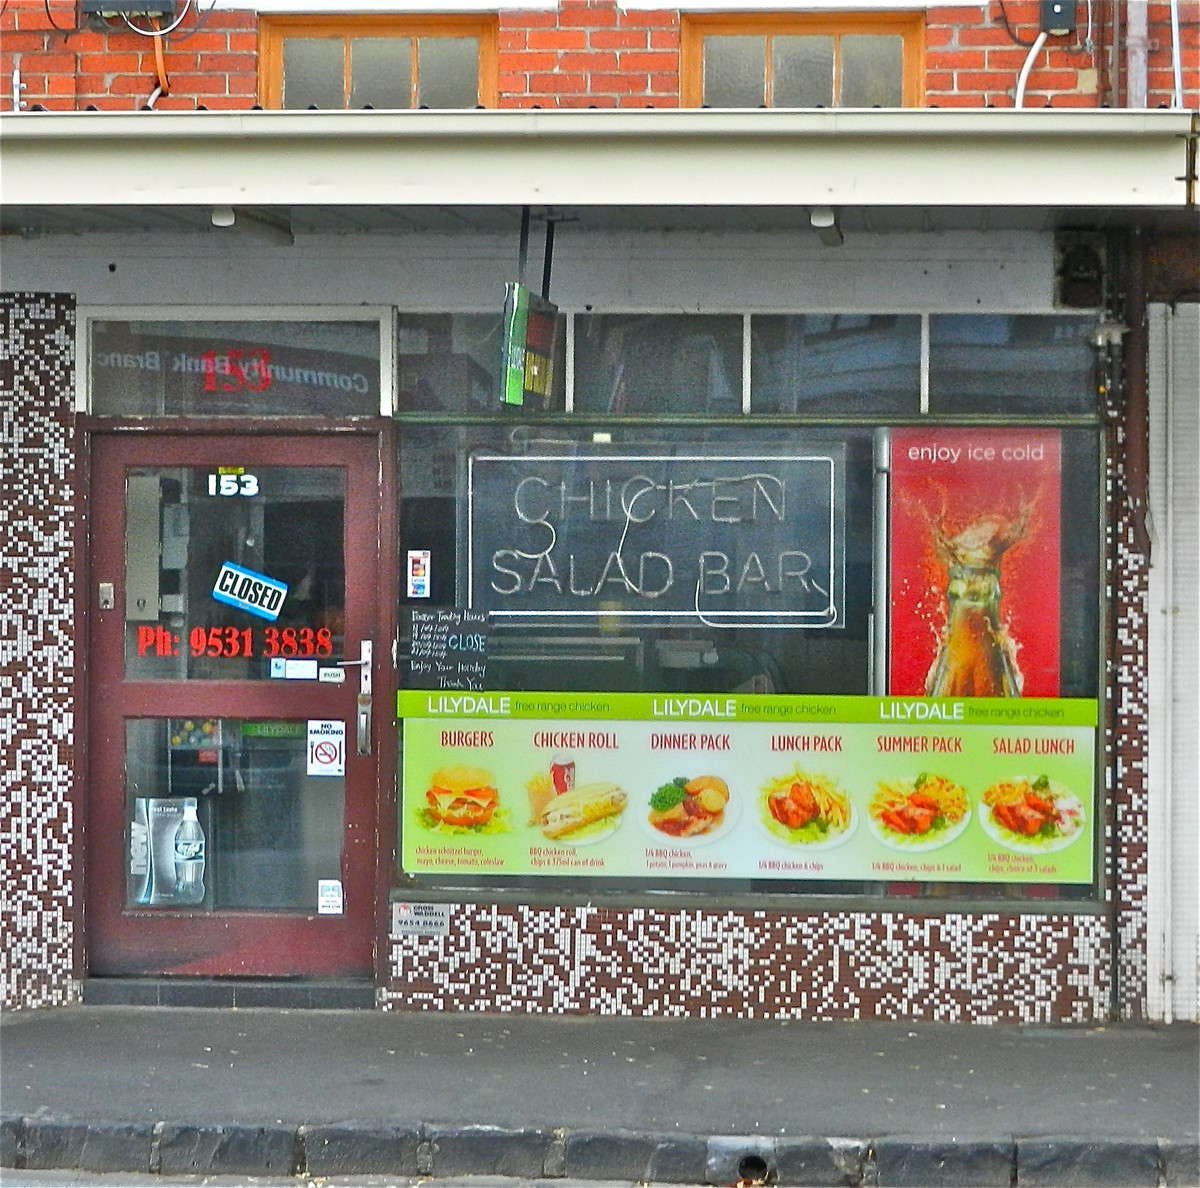 Elwood Chicken Salad and Bar - Pubs Sydney